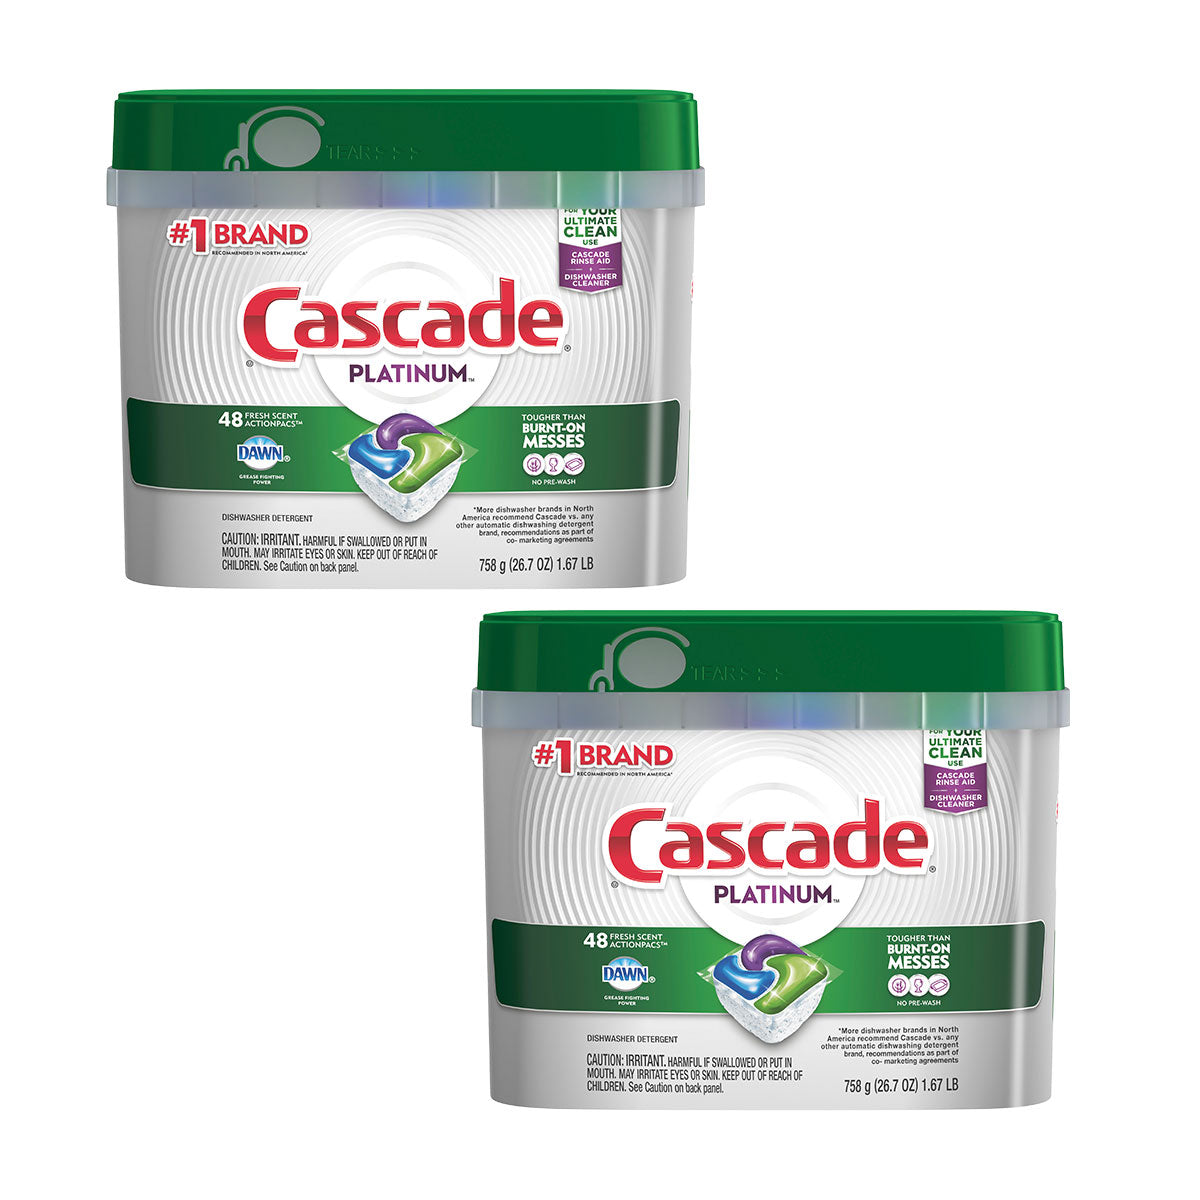 Pack Detergente lavavajillas Cascade Platinum (48 cápsulas ActionPacs) 2x $34.990